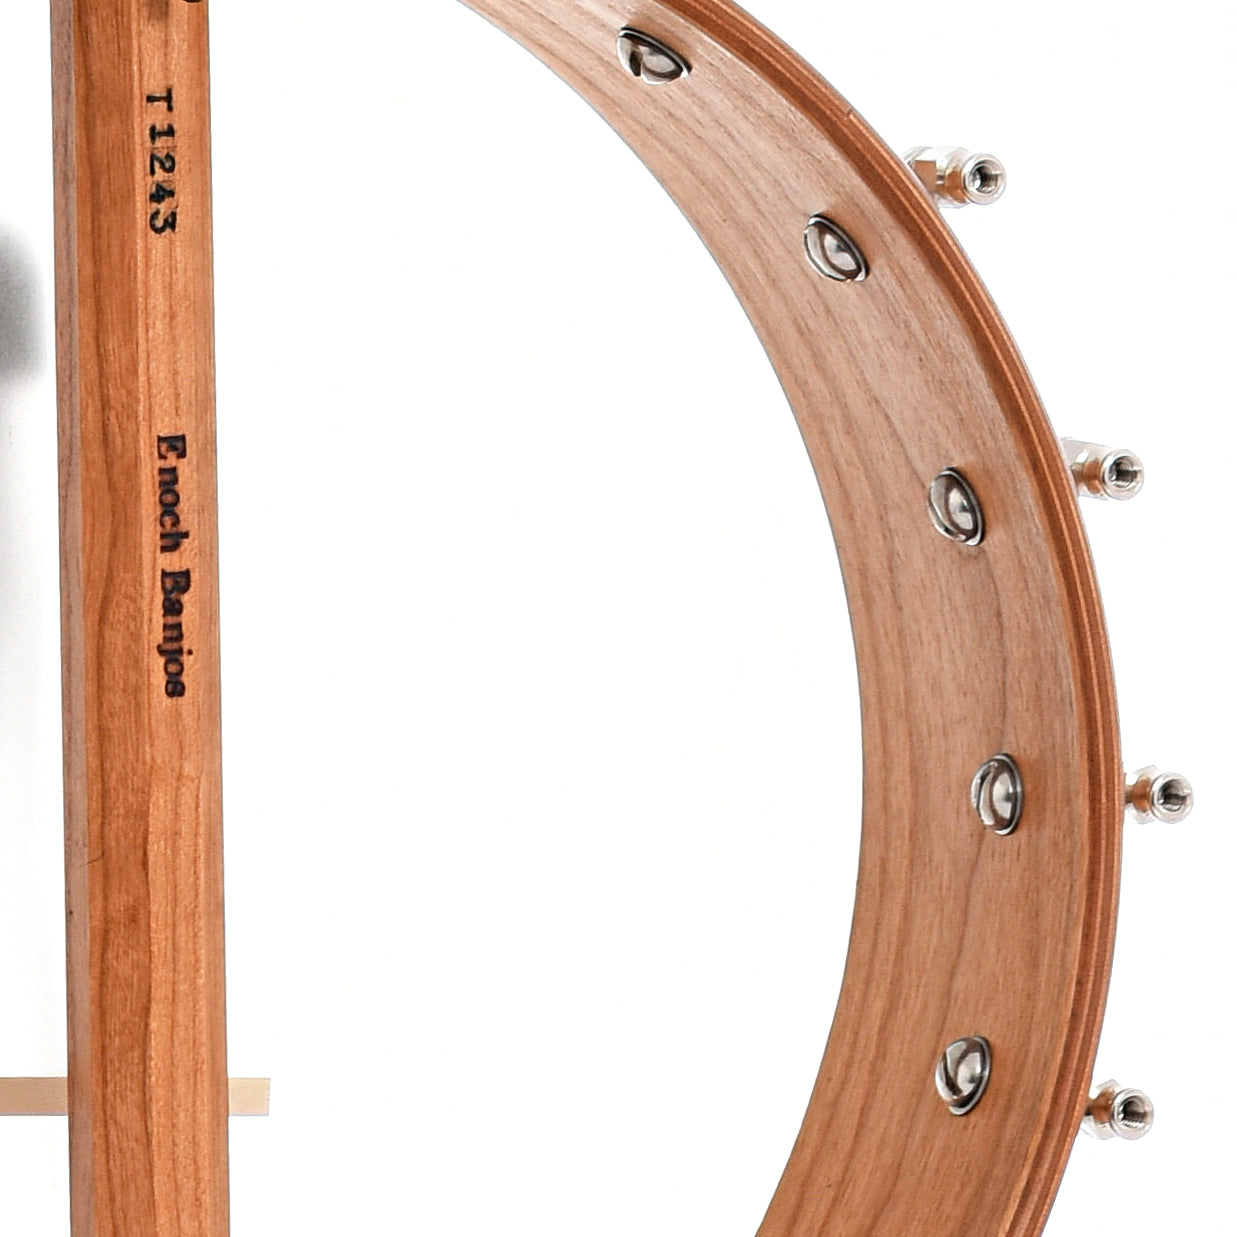 Inside rim of Enoch 11" Tradesman Openback Banjo